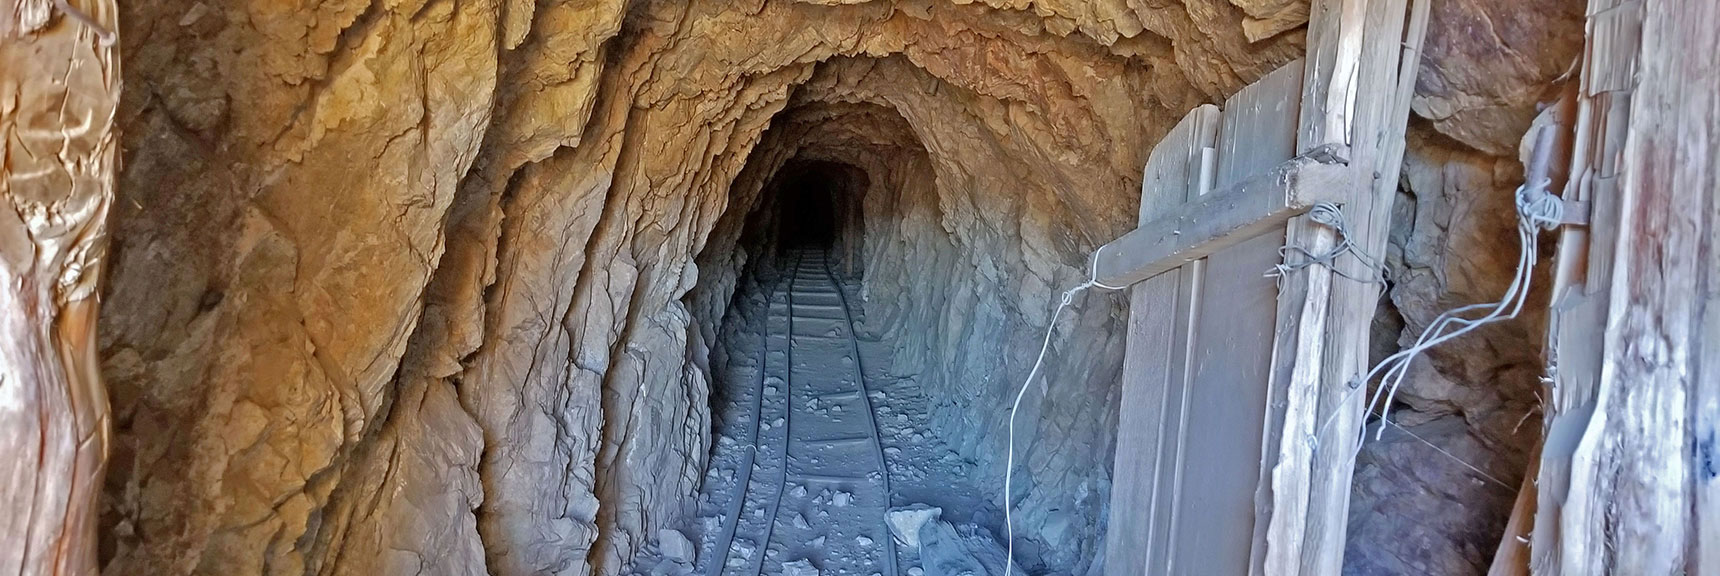 Eureka Mine | Death Valley National Park, California